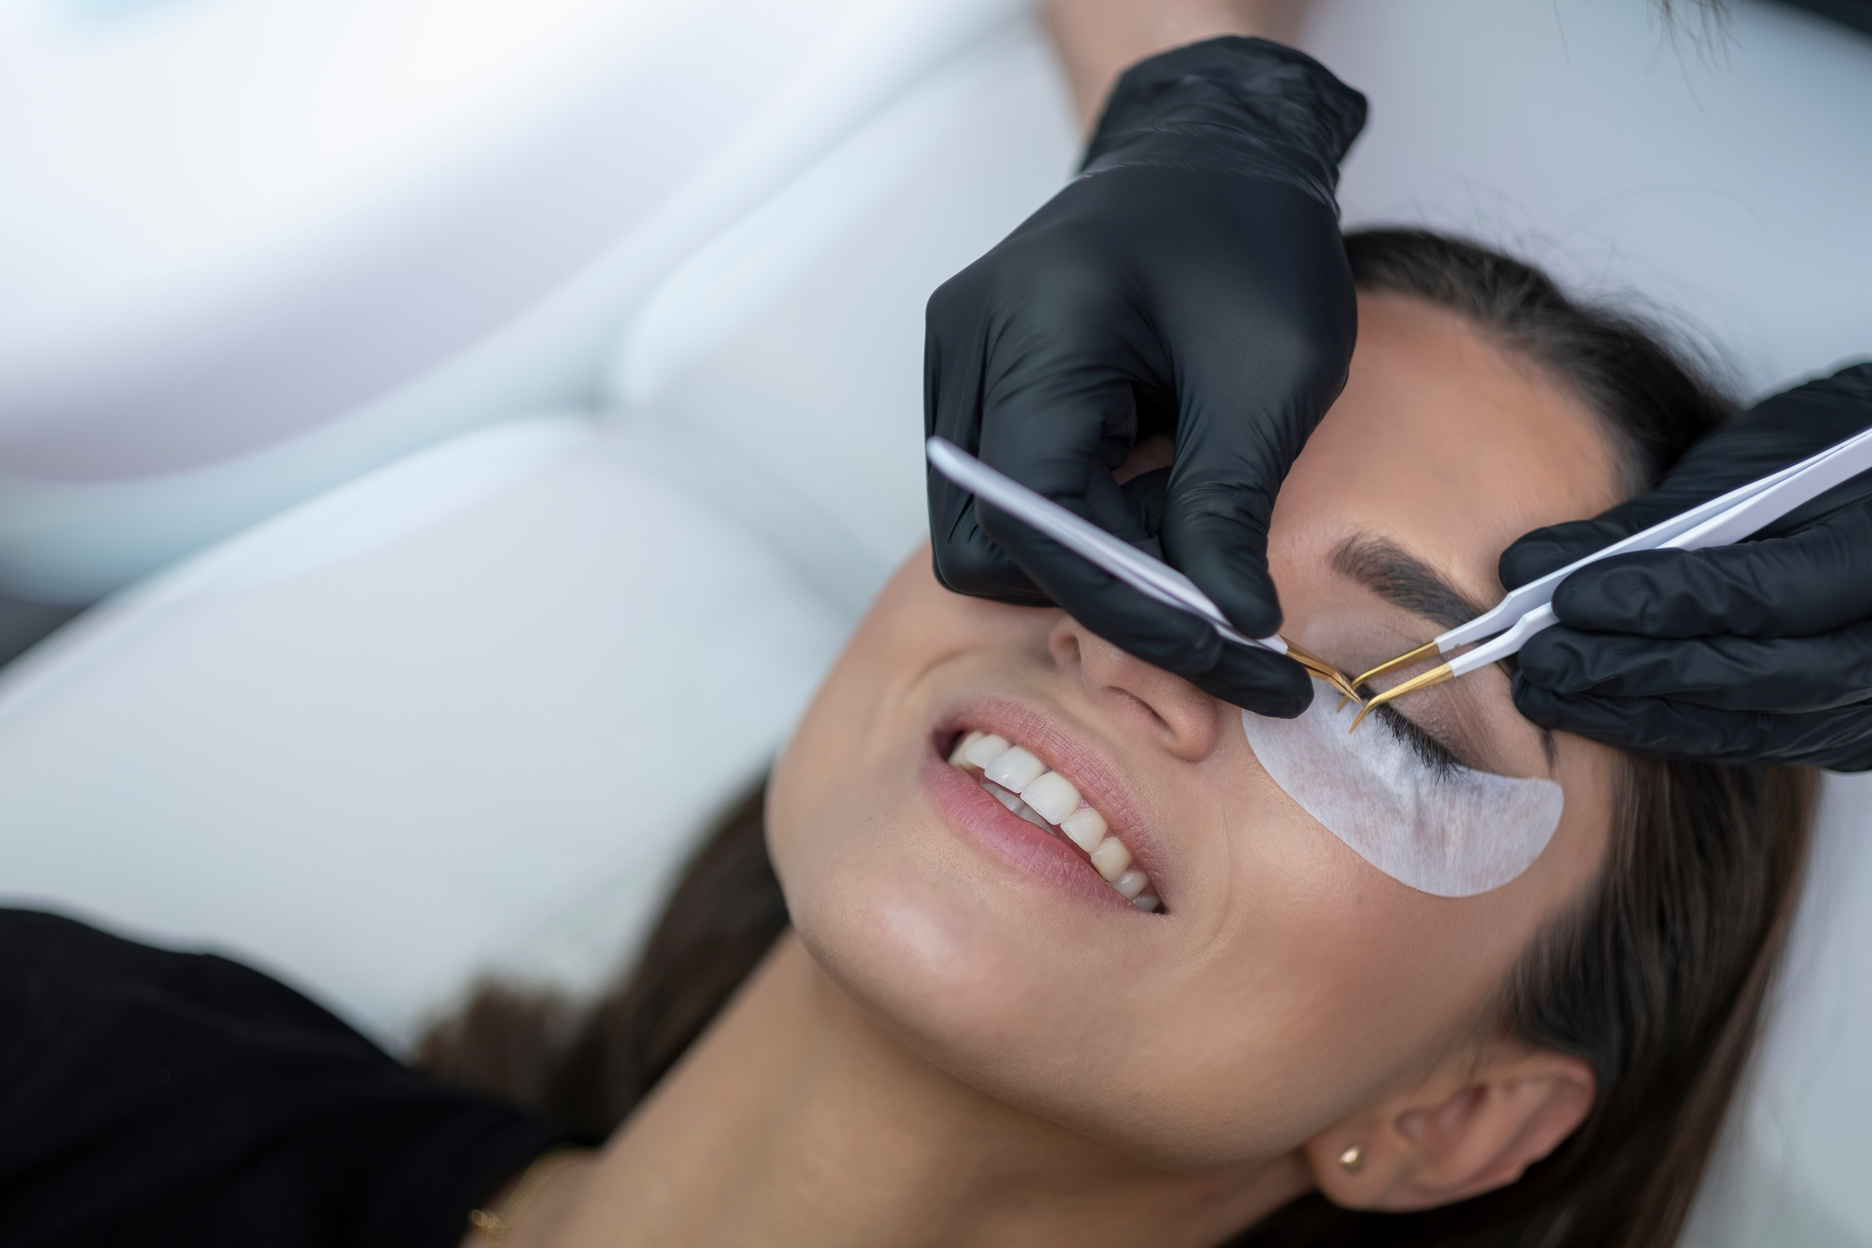 The procedure of eyelash extension